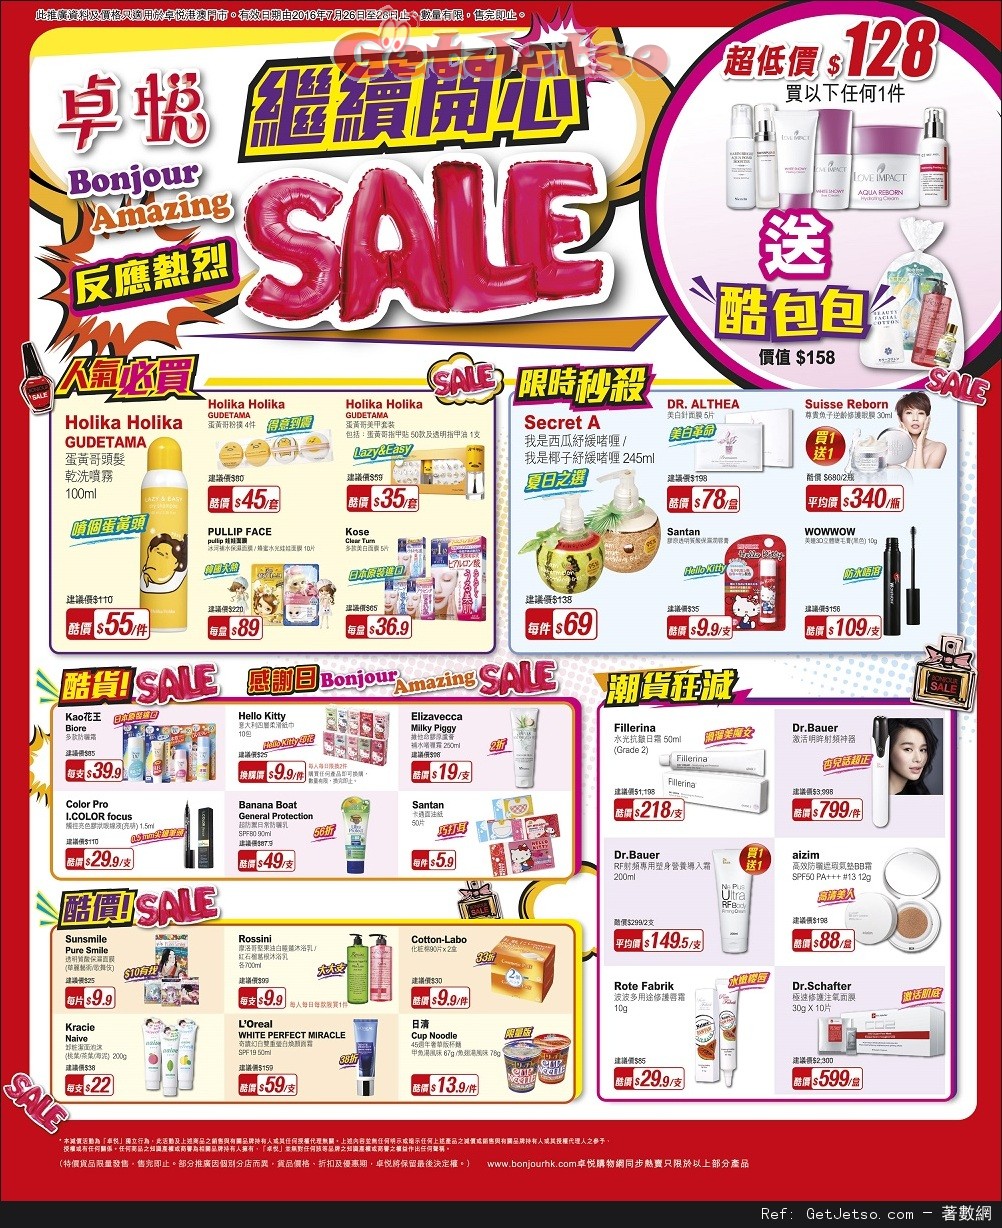 卓悅Amazing Sale 購物優惠(至16年7月28日)圖片1